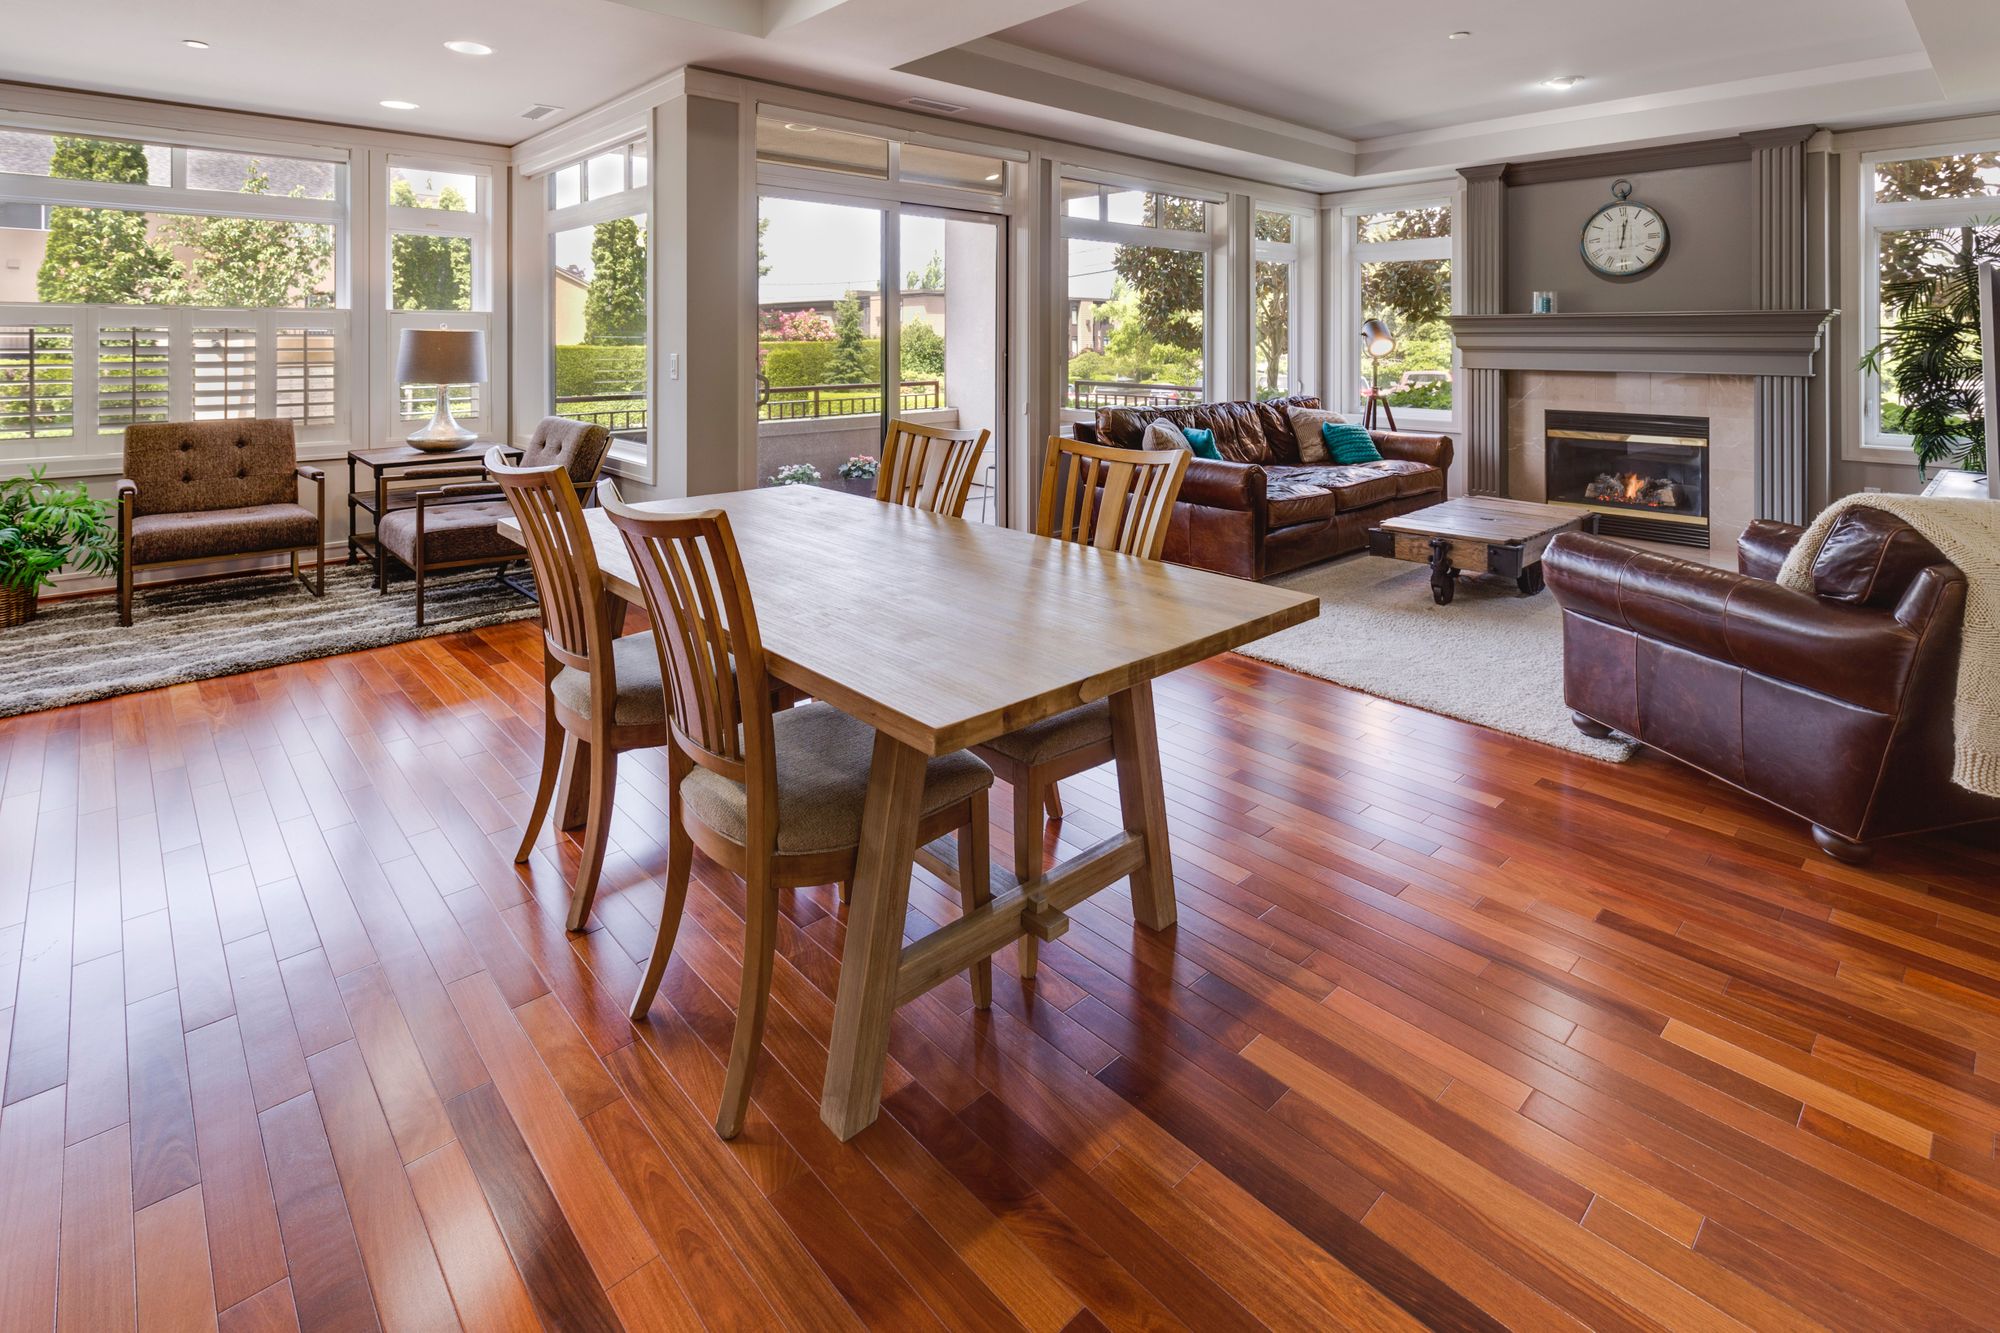 Do Hardwood Floors Increase Home Value, Cost Of Hardwood Floors For 2000 Square Feet